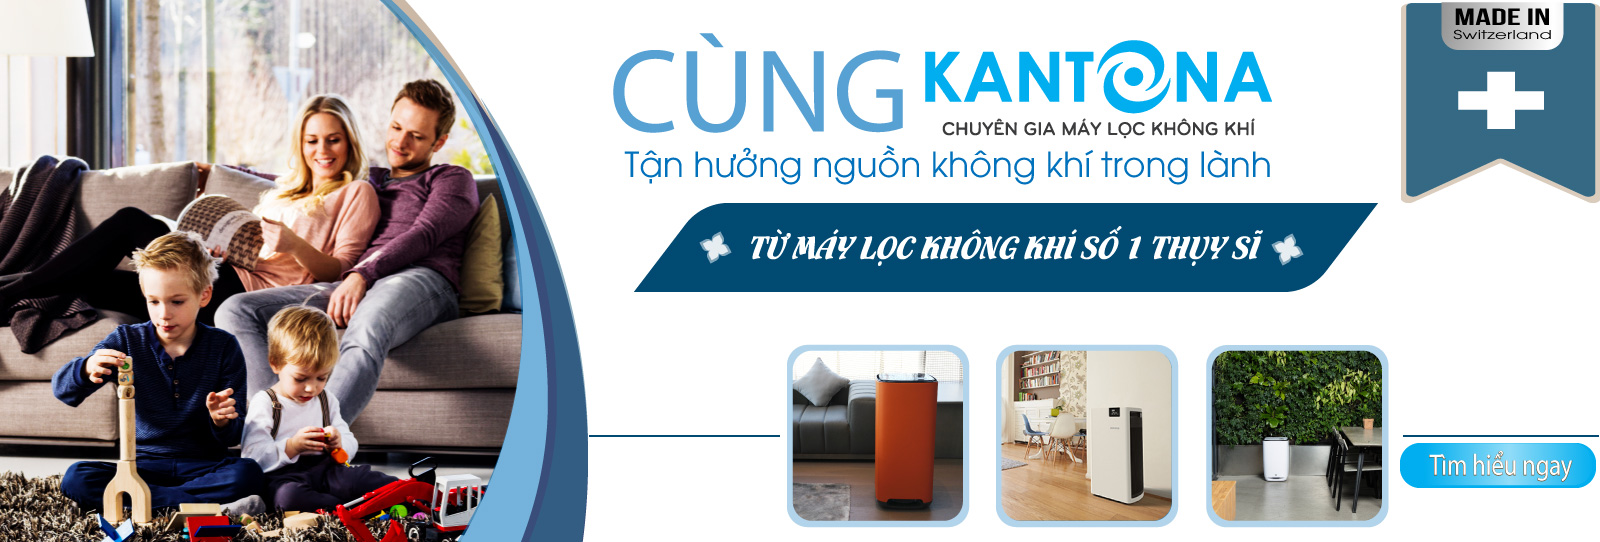 banner web kantona may loc khong khi nhap khau thuy si - Trang chủ